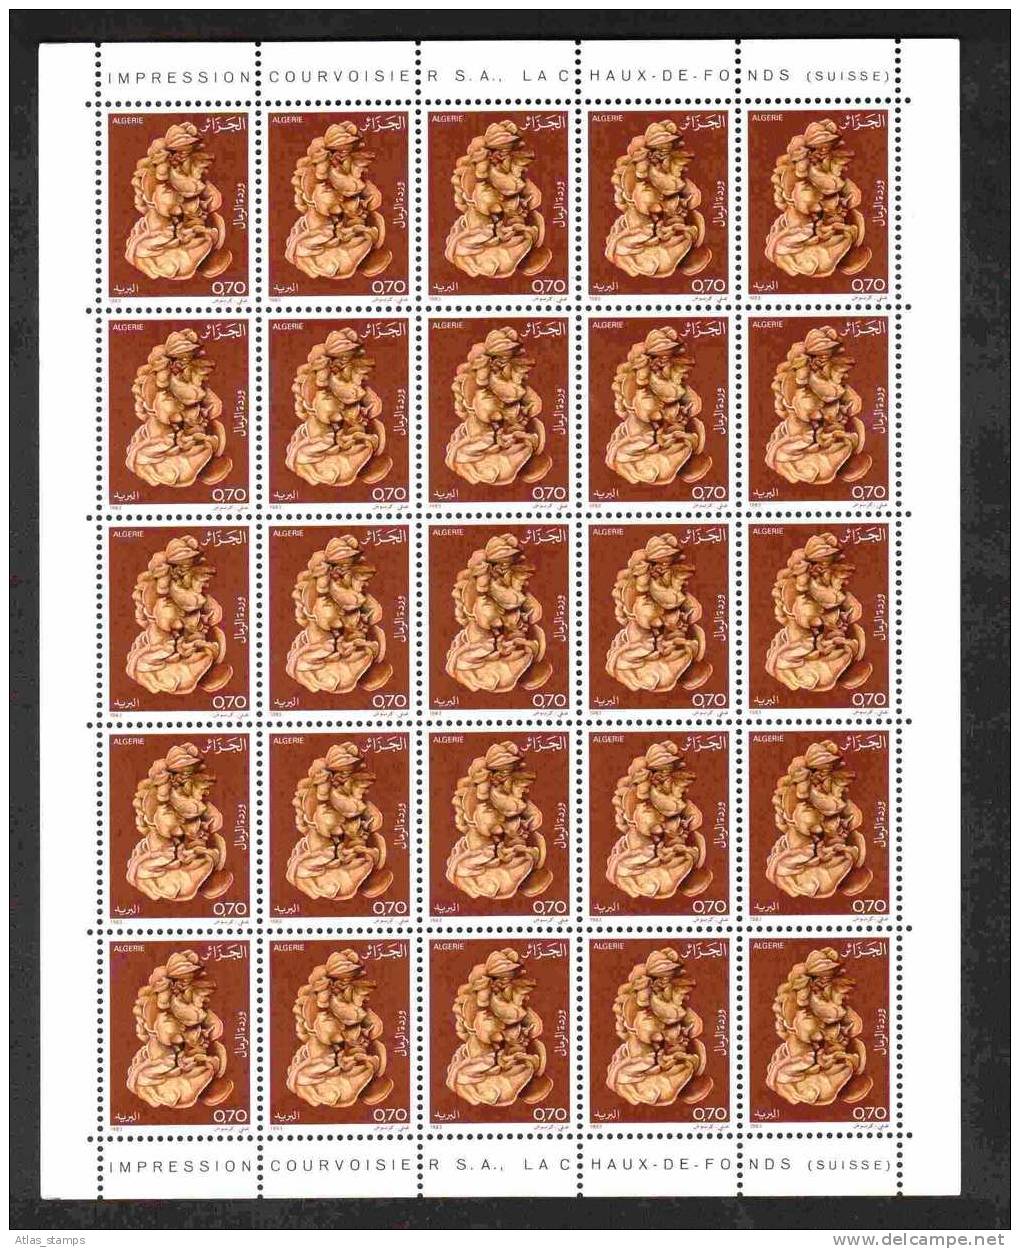 Algeria 1983 - Minerals " Desert Rose & , 70c  , Full Sheet Of 25 Stamps - MNH - Minerals